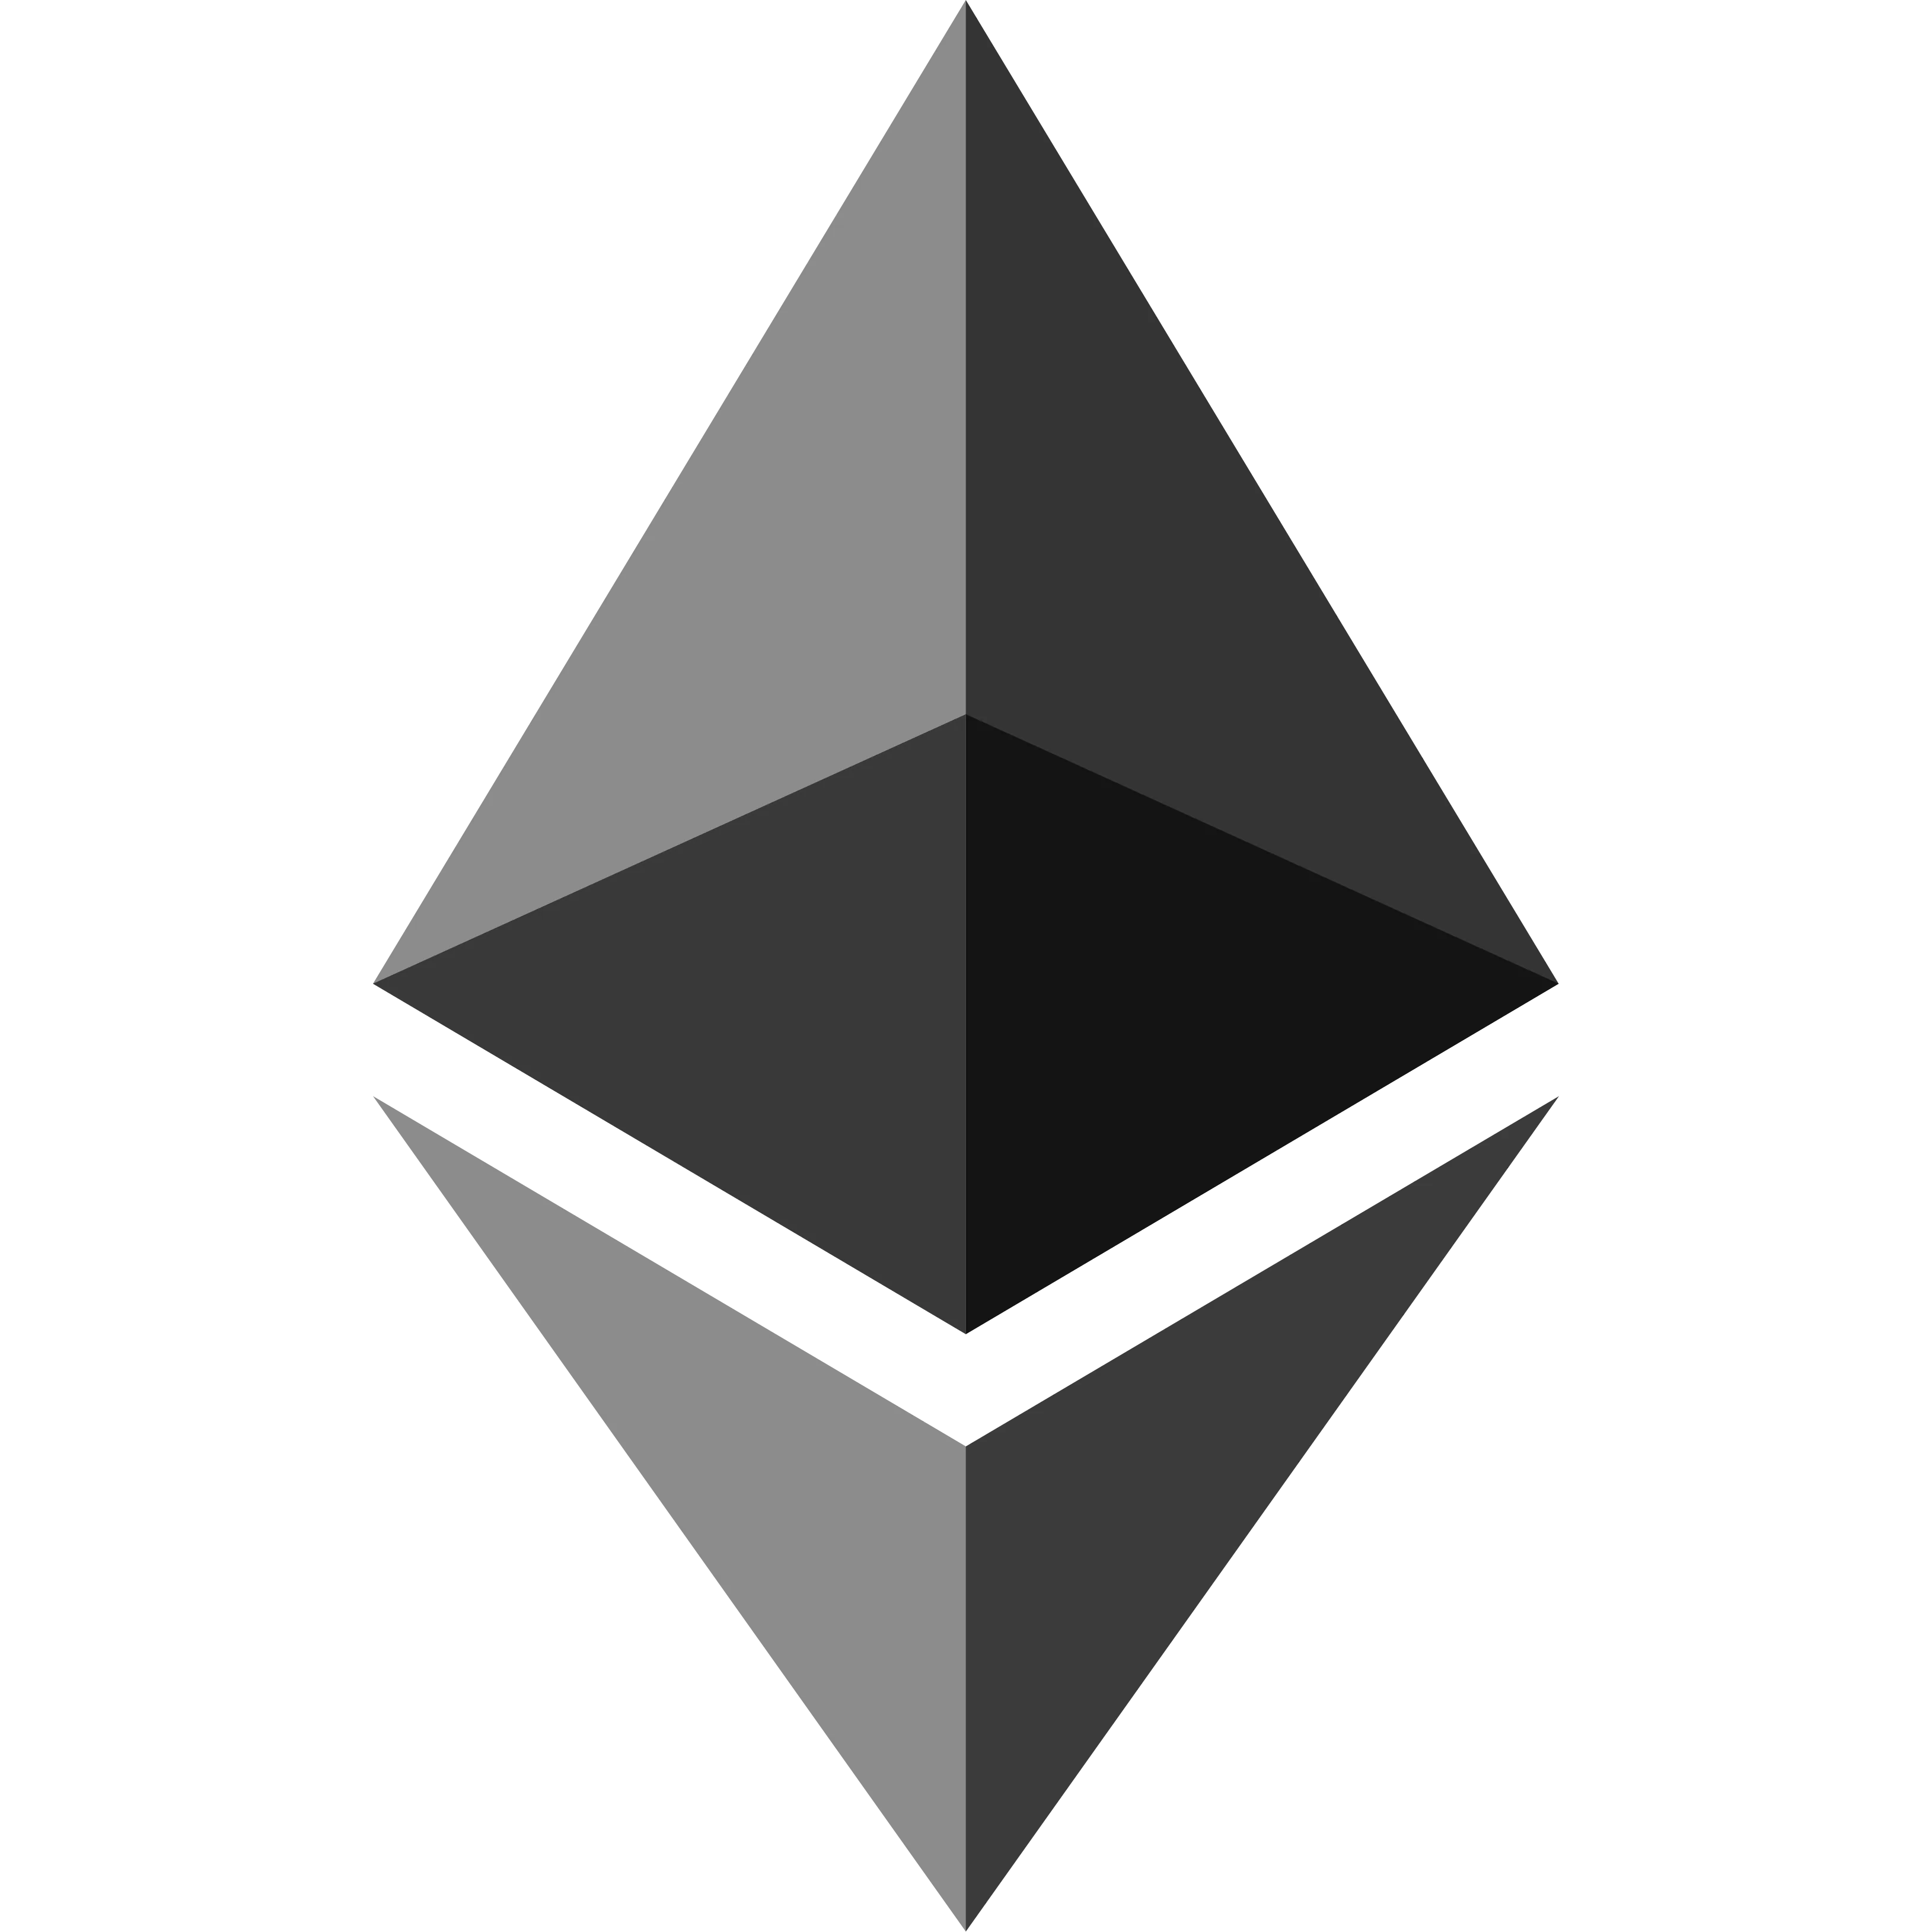 Ethereum logo in png format